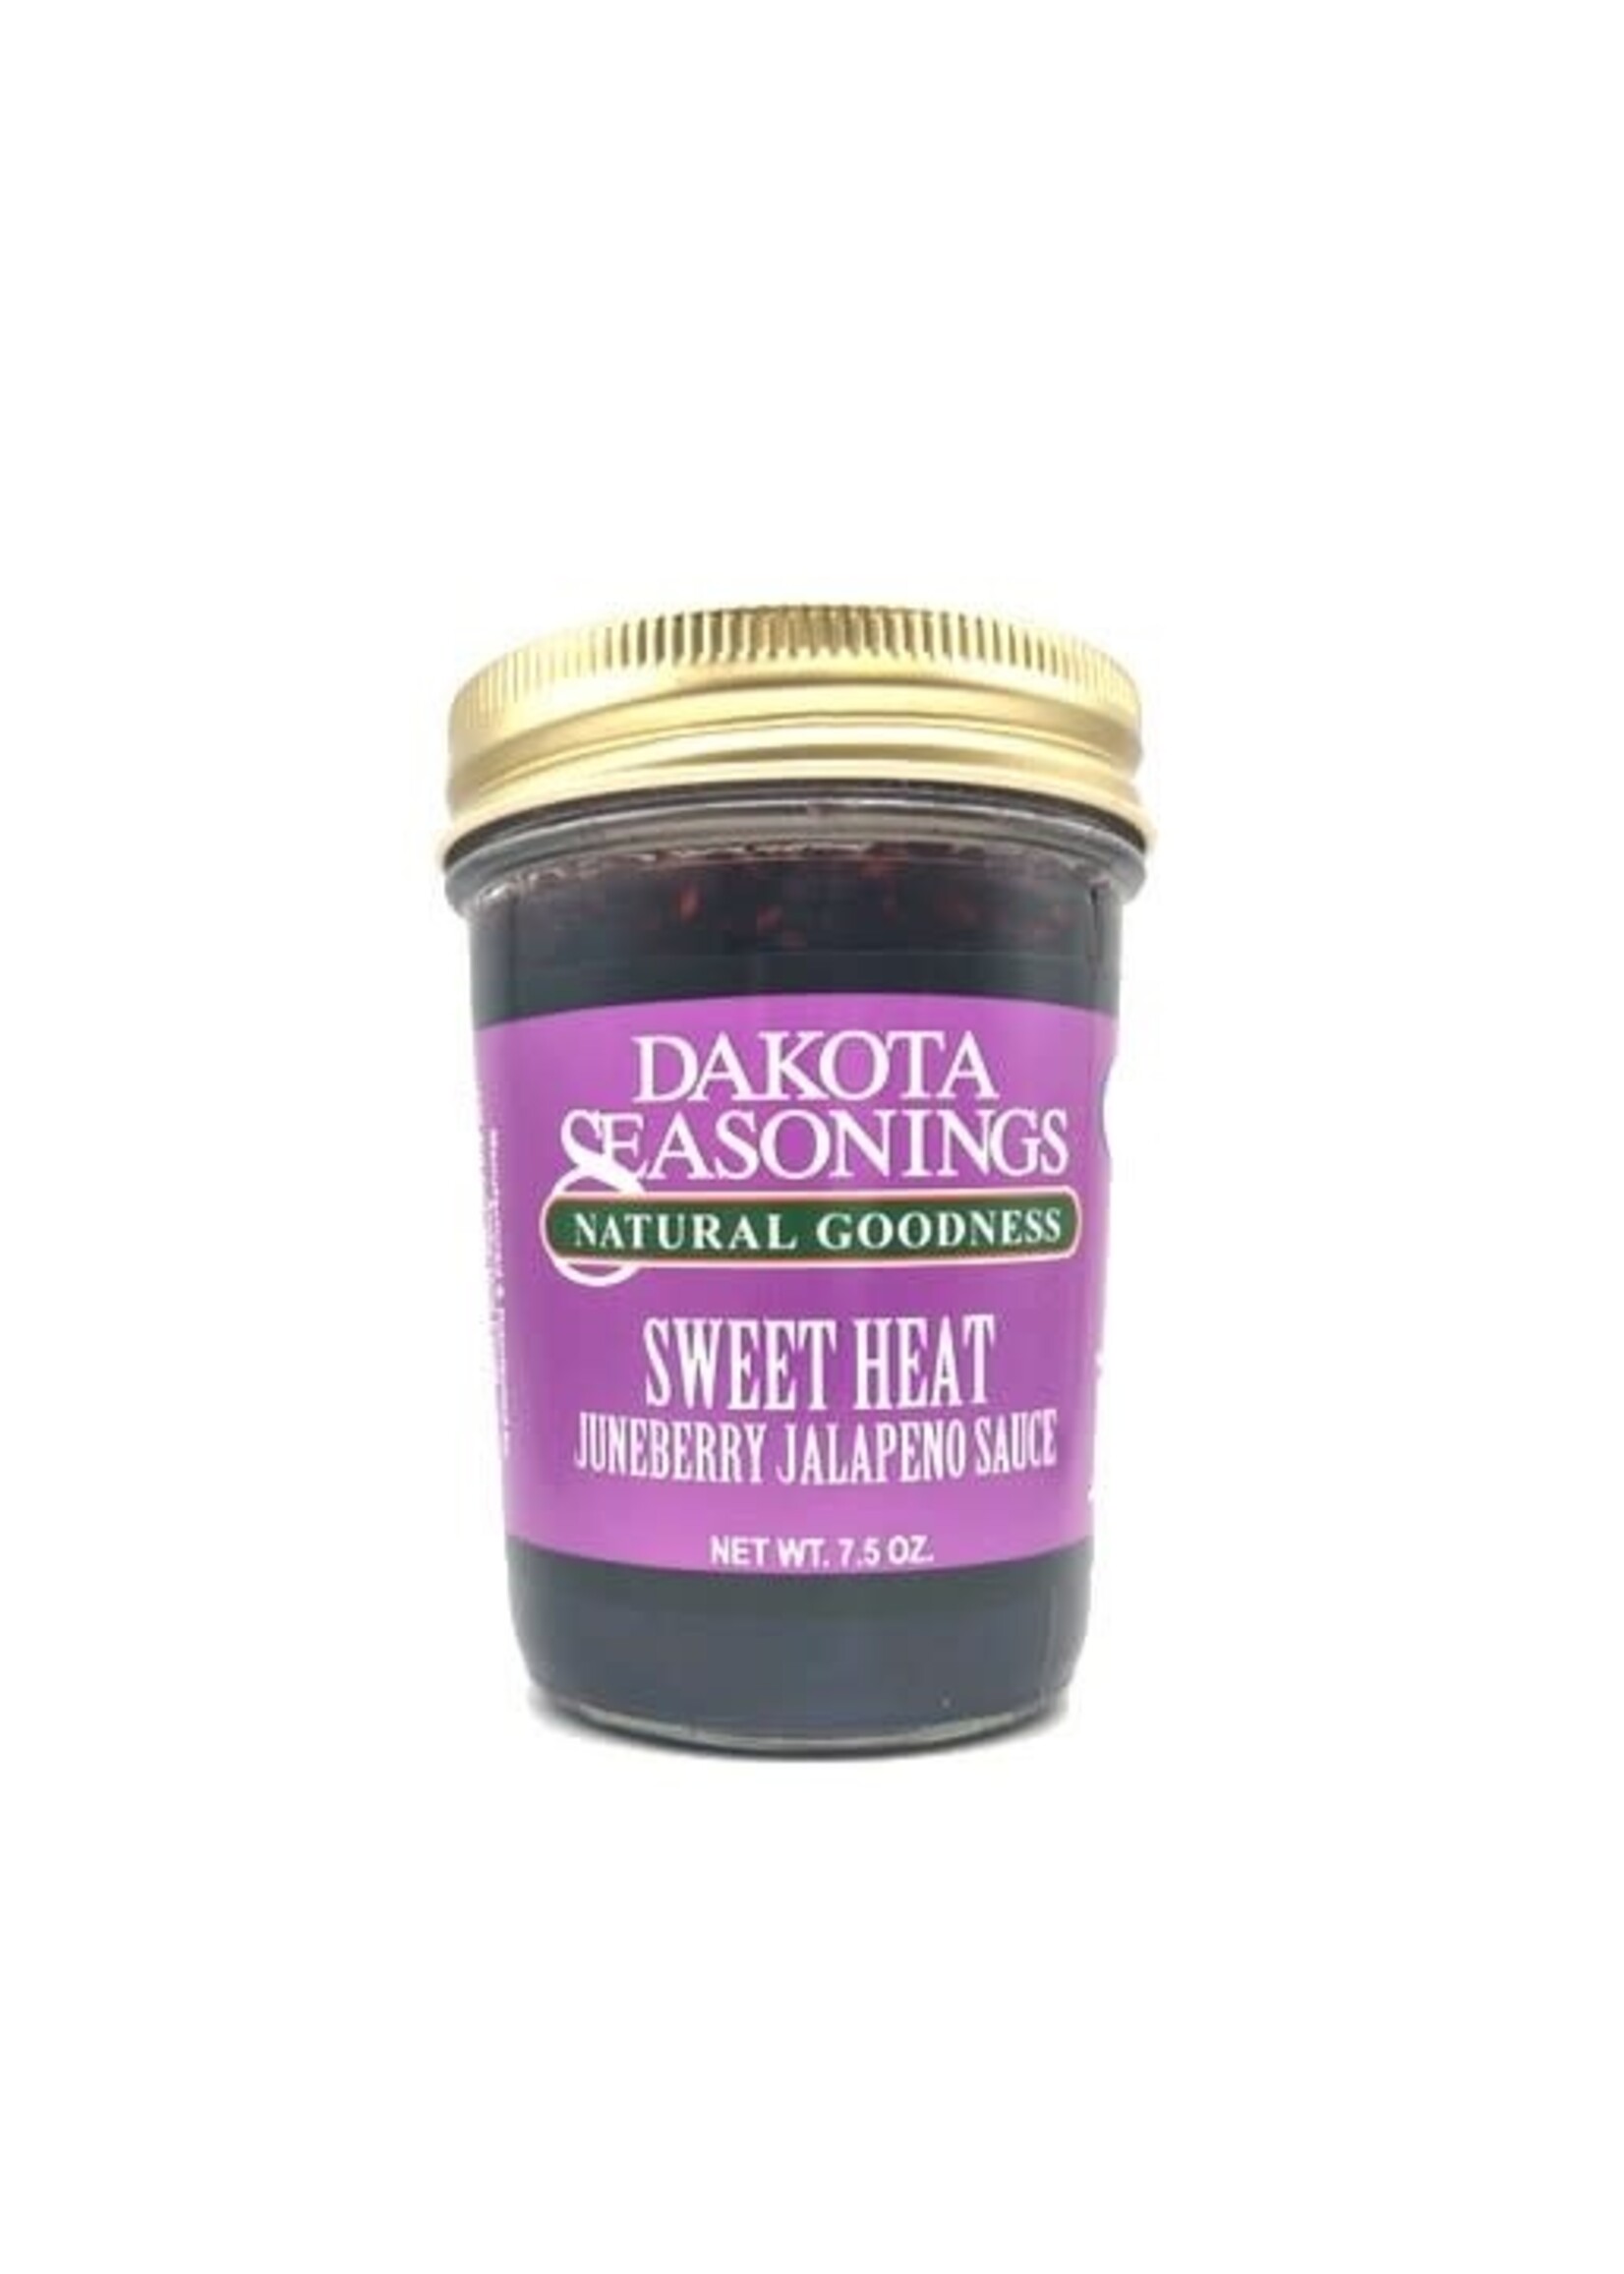 Dakota Seasonings Sweet Heat Juneberry Jalapeno Sauce 7.5oz